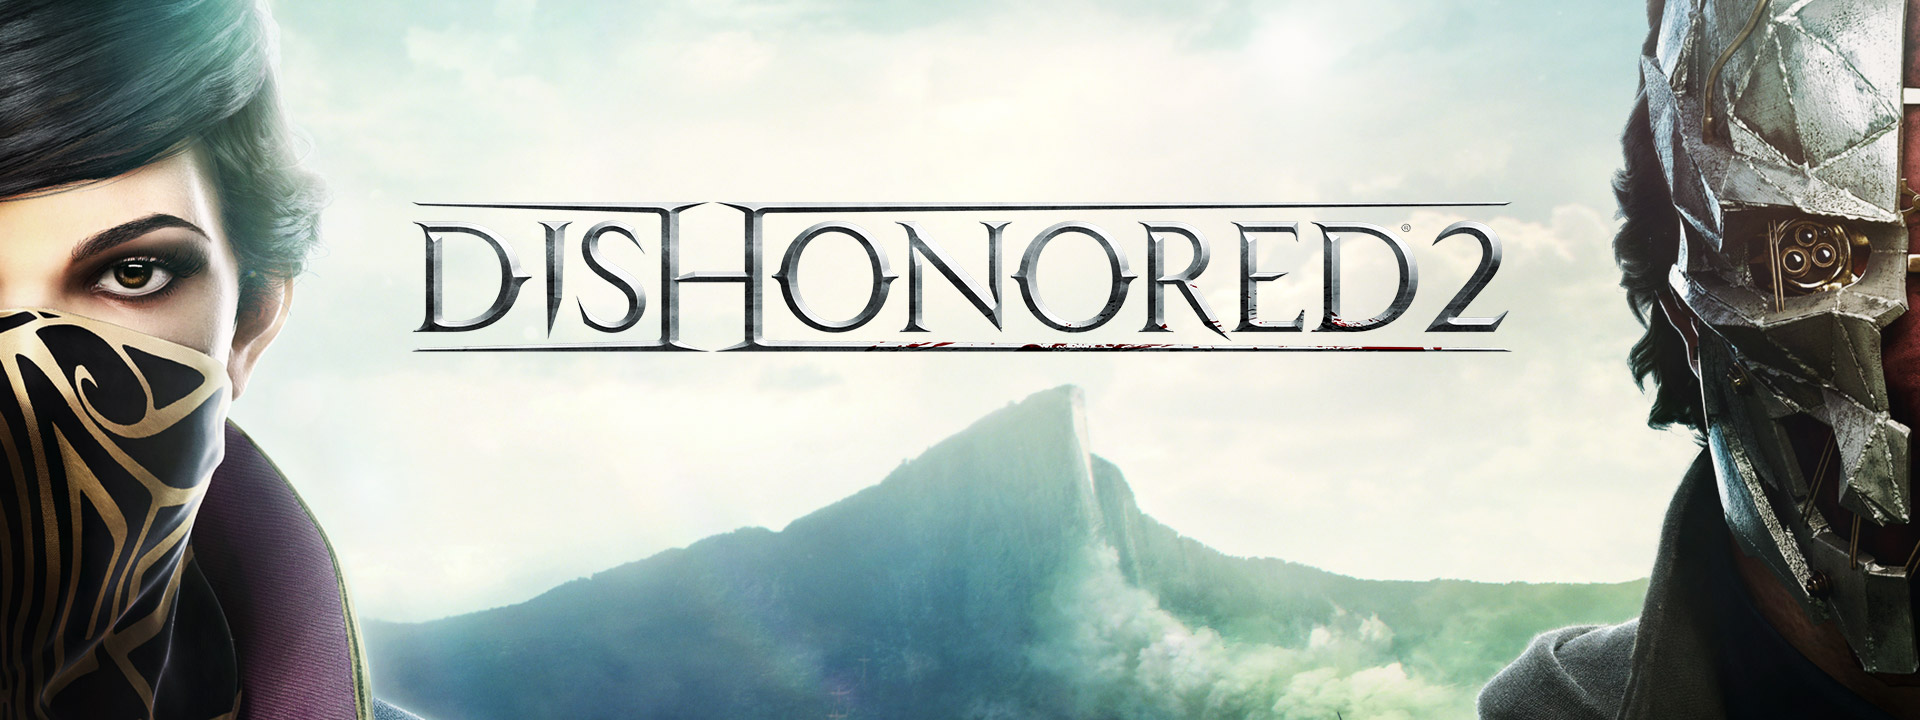 В Dishonored 2 можно поиграть бесплатно на PS4, Xbox One и ПК